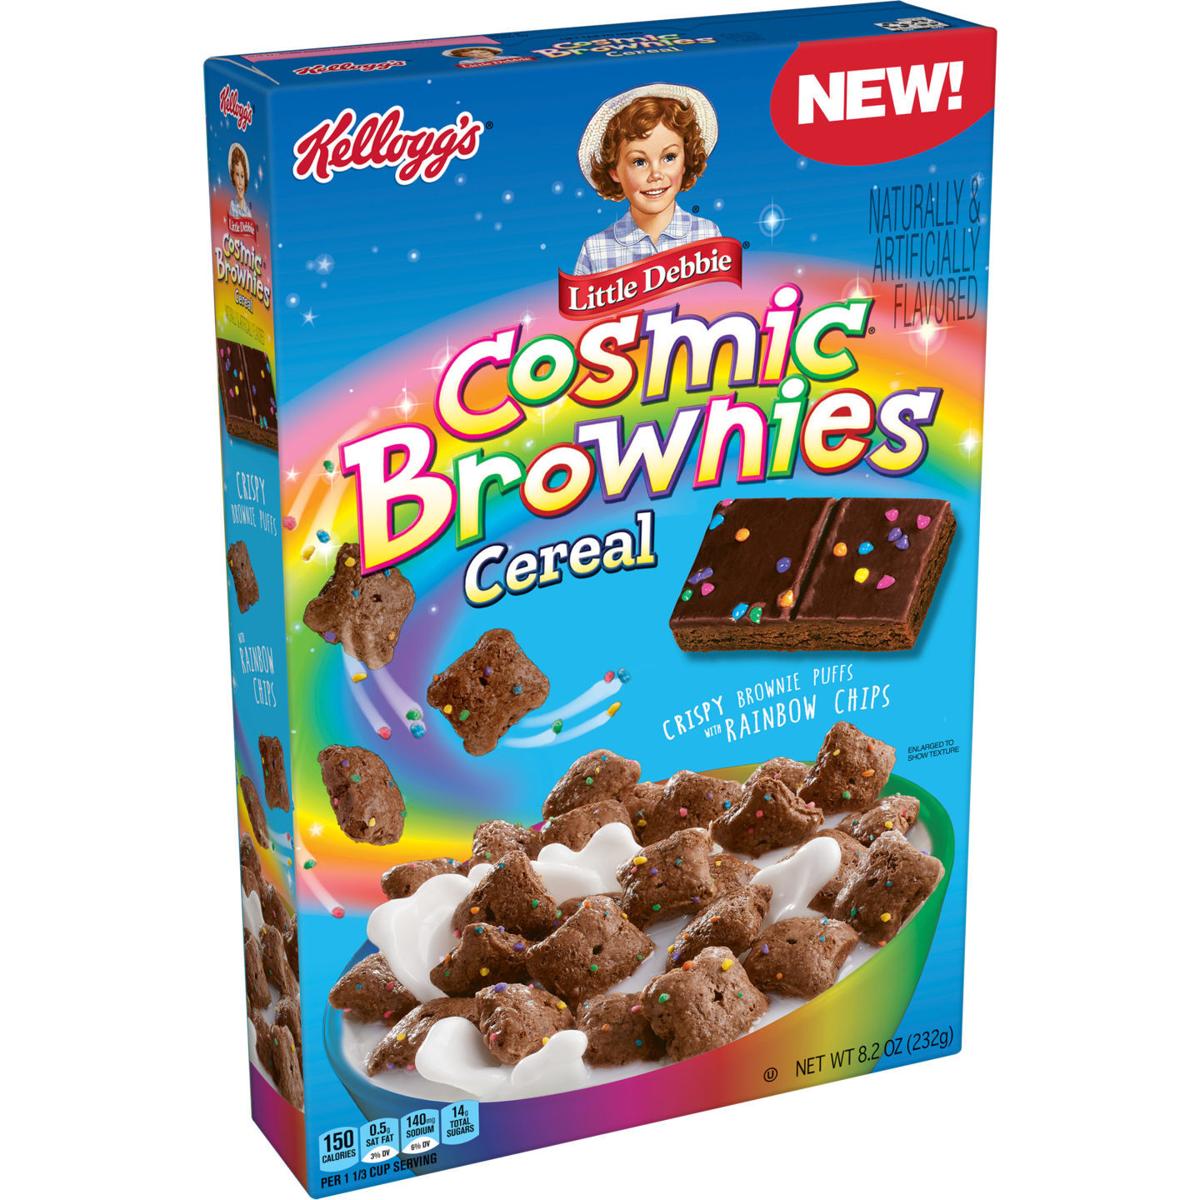 Cosmic brownie bake-off is here!!!!!! And this winner is